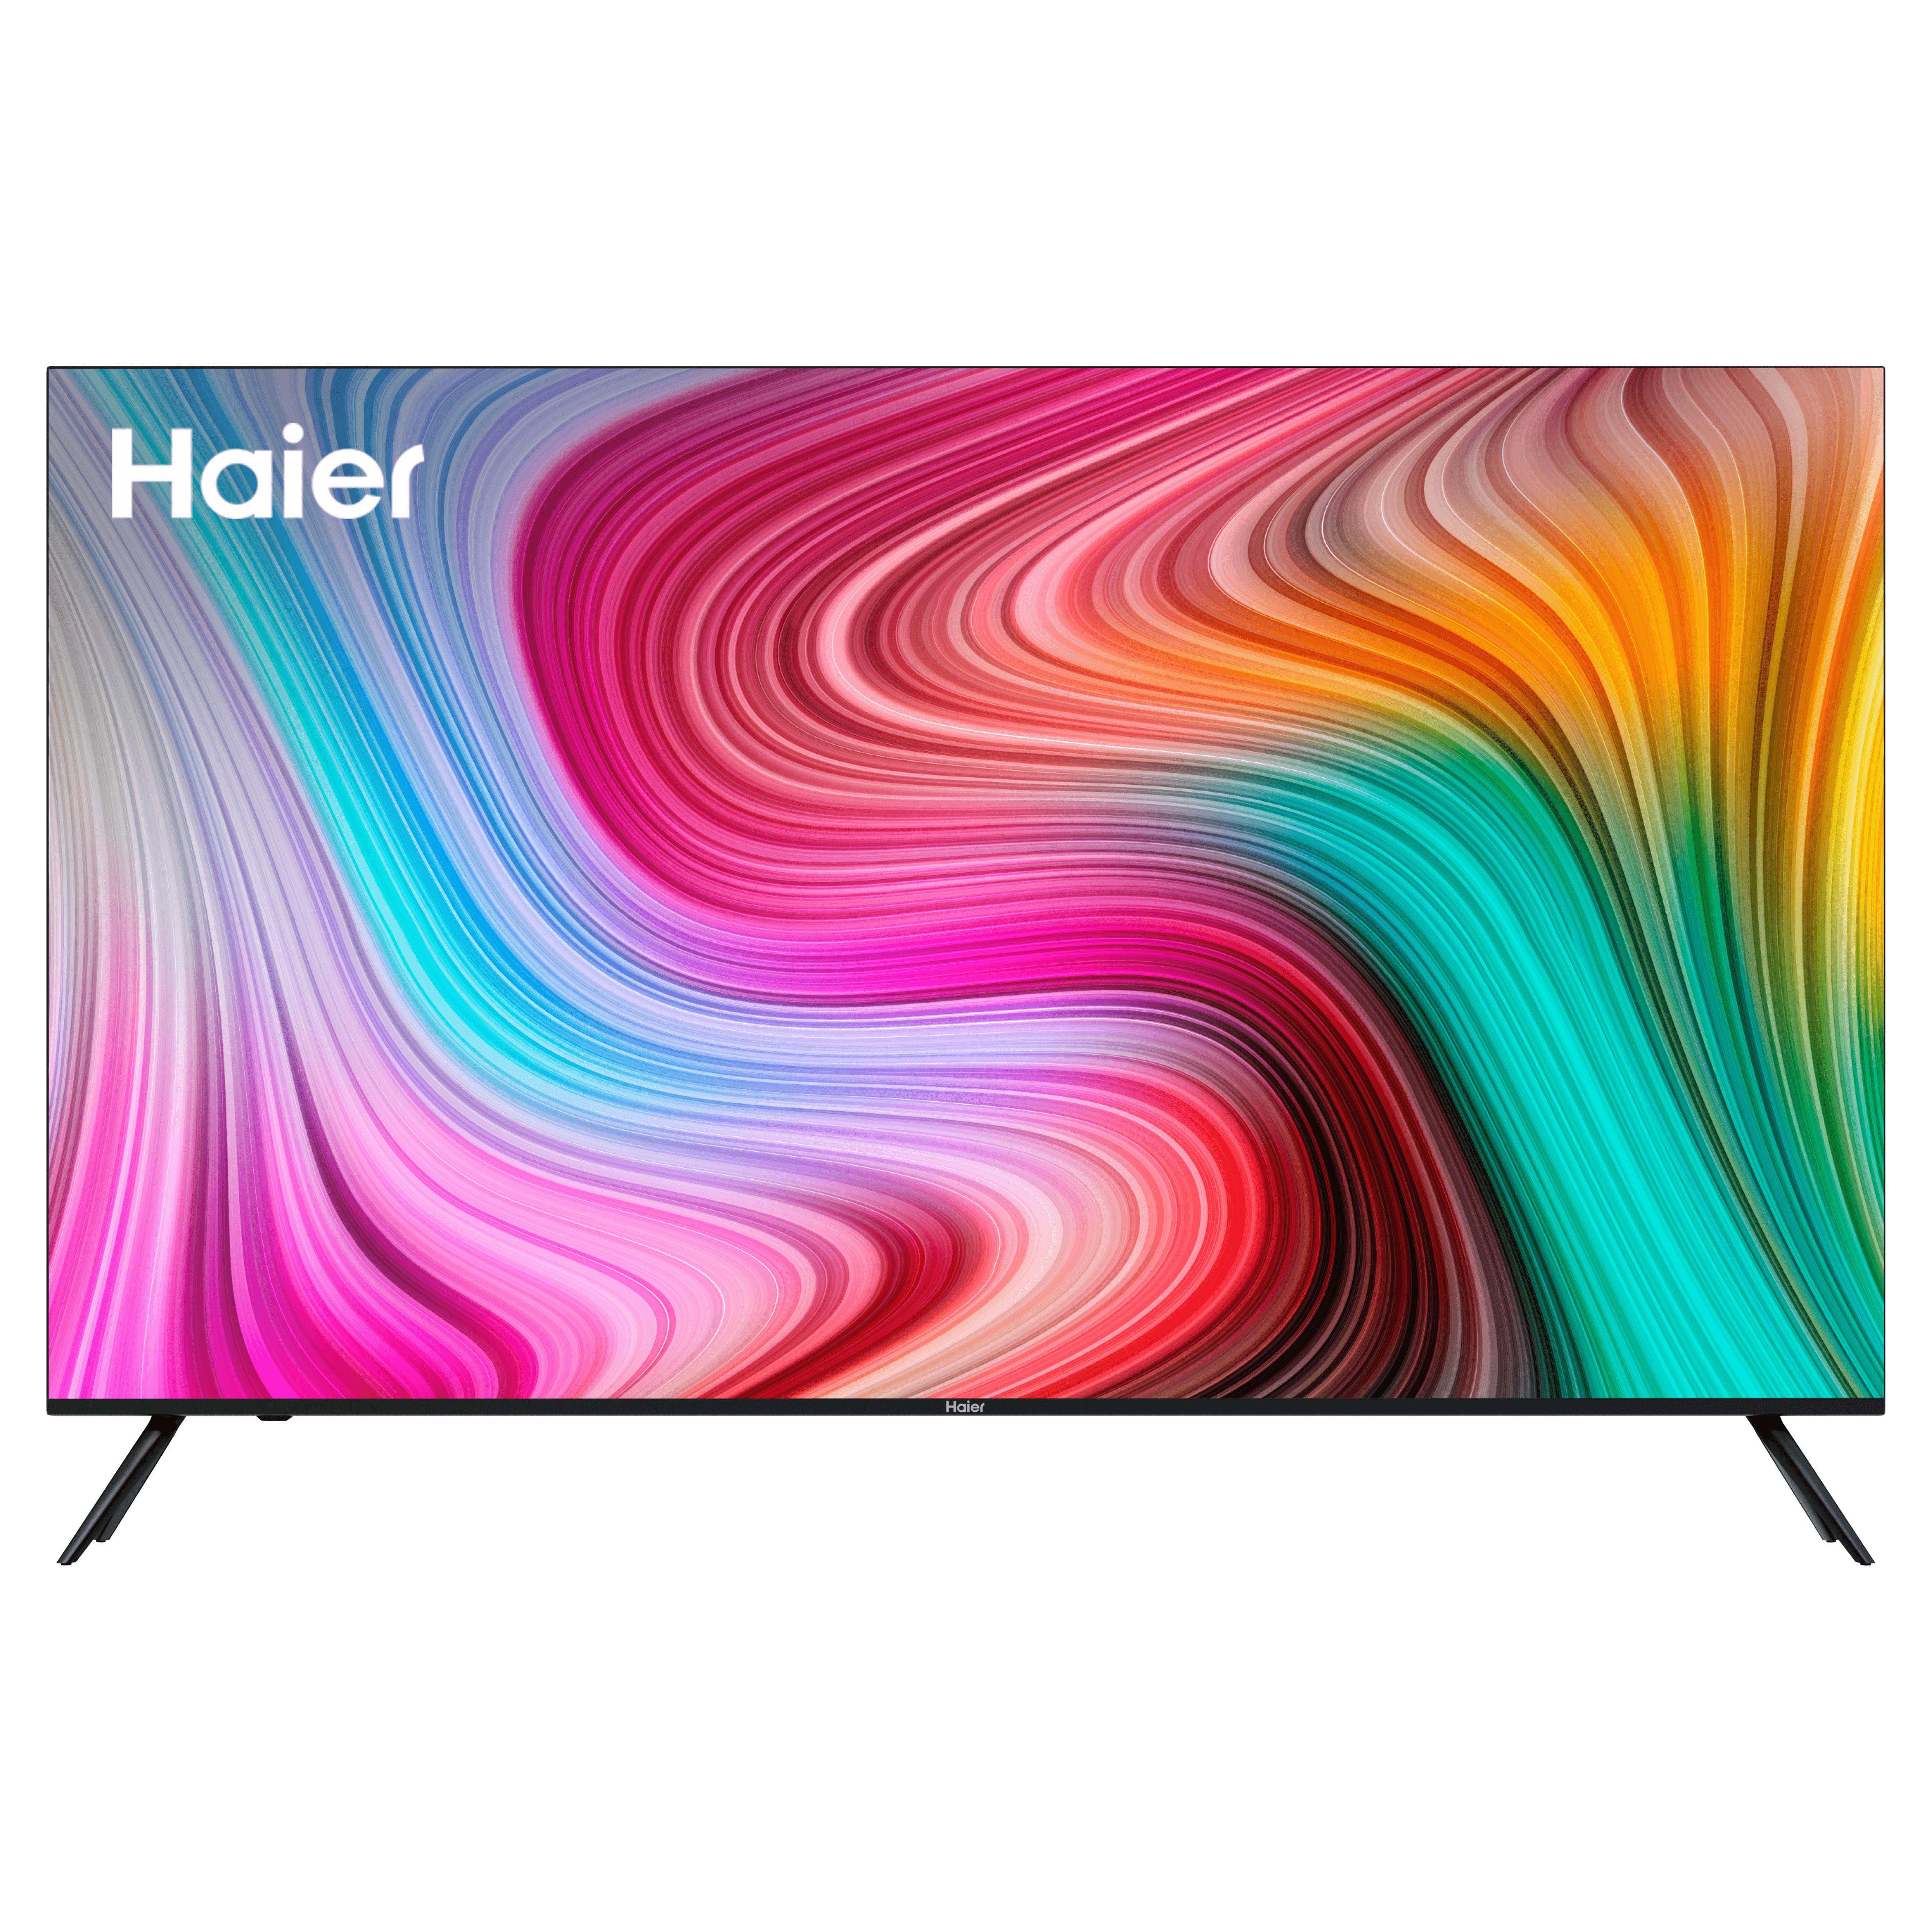 Haier tv s1 43 купить. Haier 43 Smart TV MX. Haier 50 Smart TV MX. Телевизор Haier 65 Smart TV MX. Телевизор Haier 32 Smart TV MX.